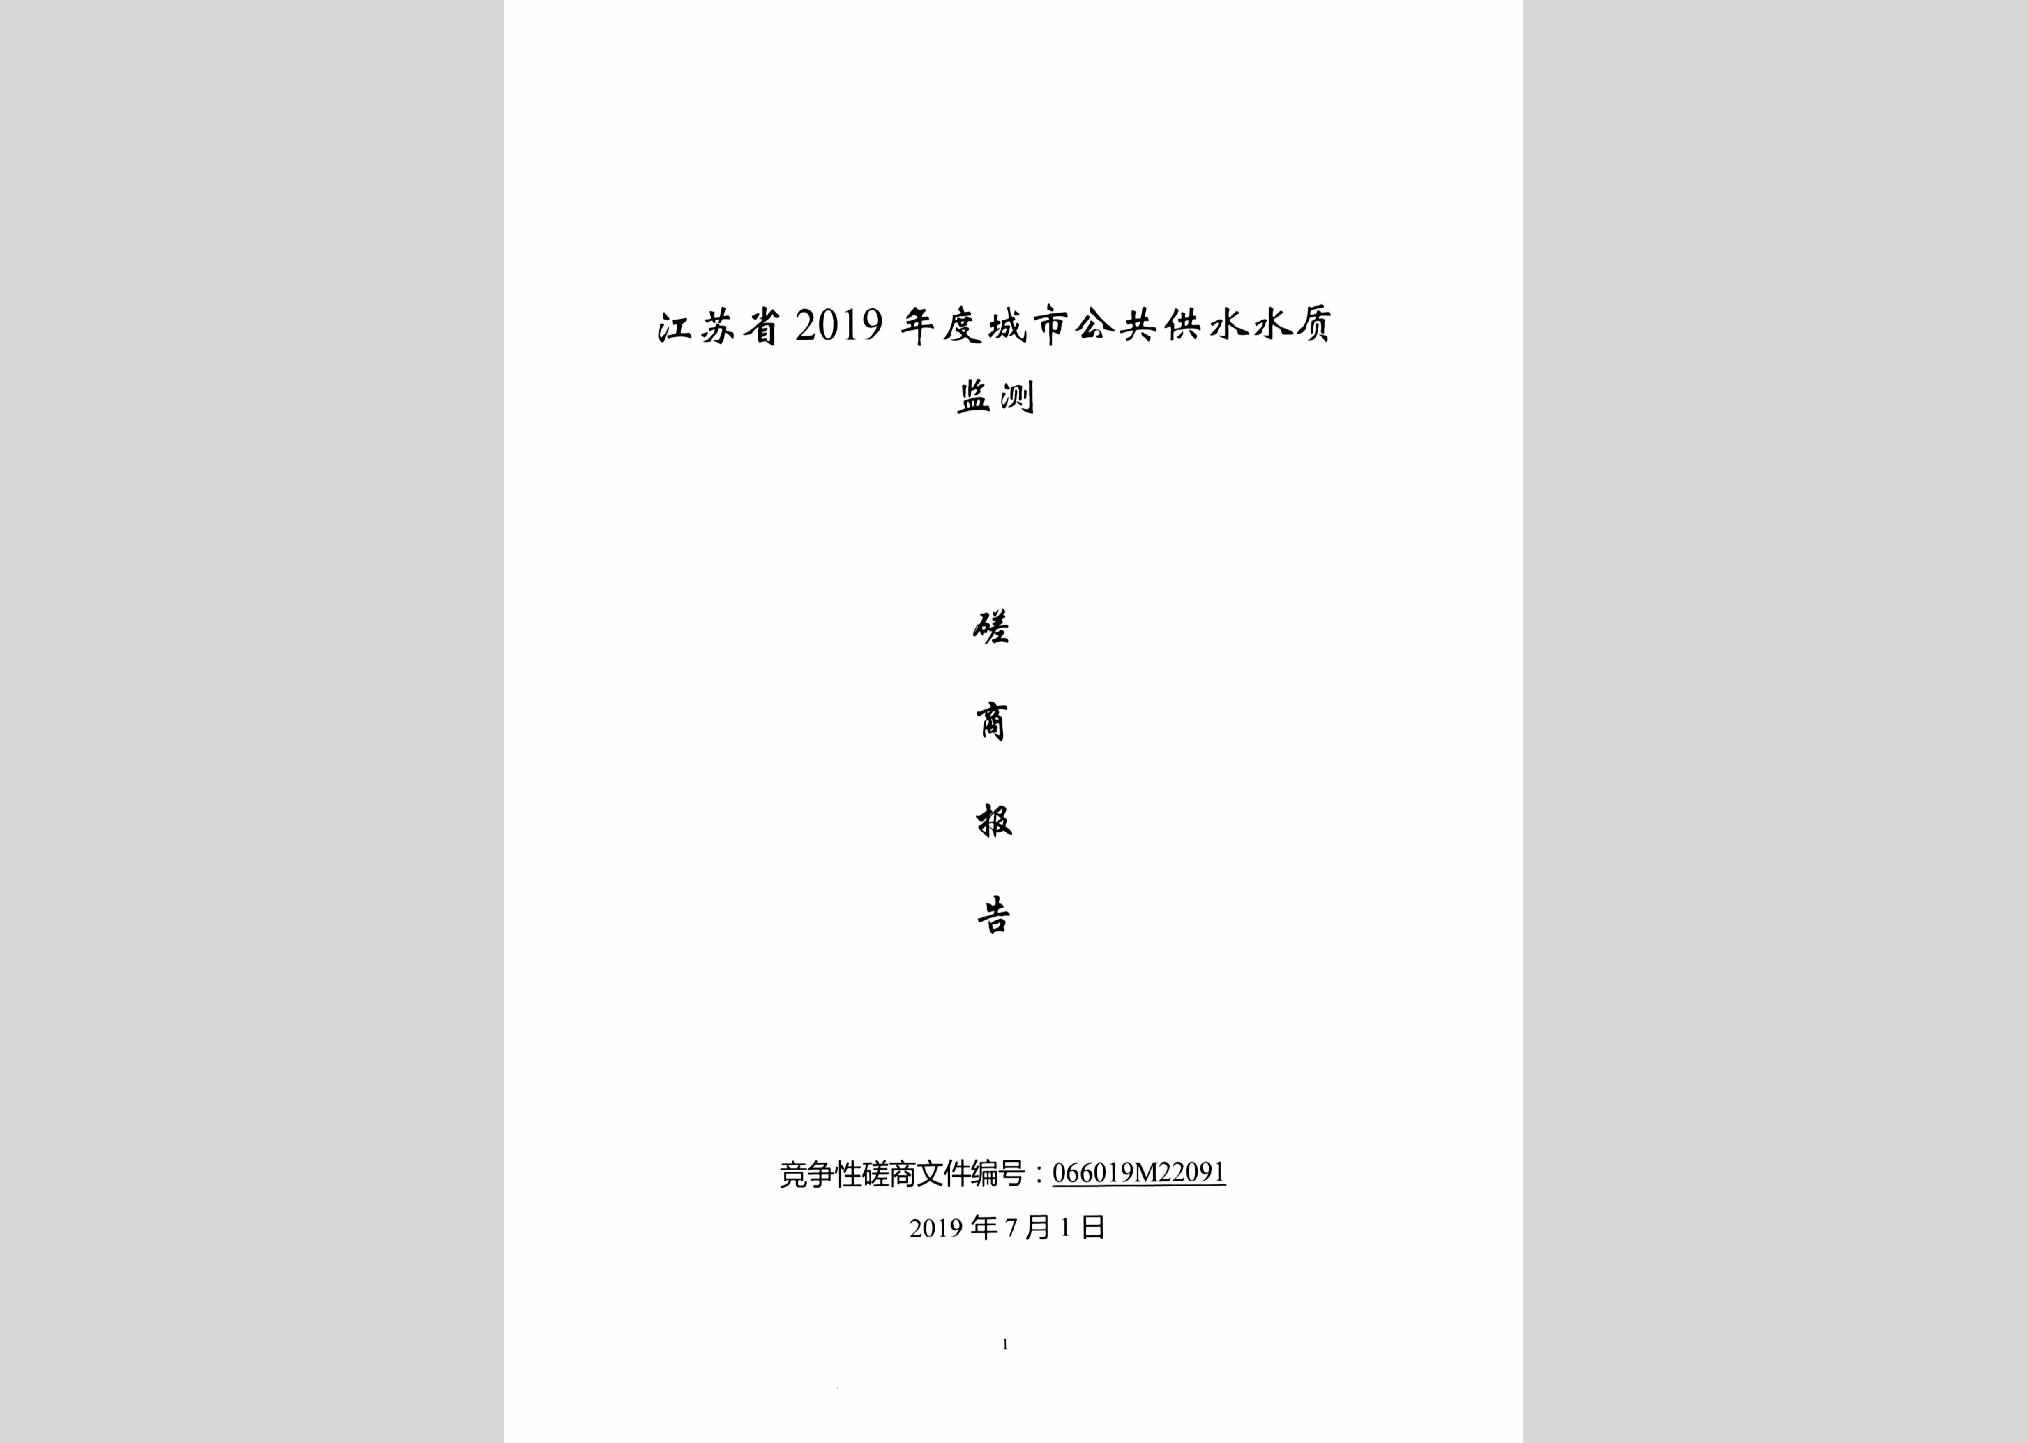 JS-CSGGGSSZ-2019：江苏省2019年度城市公共供水水质监测磋商报告